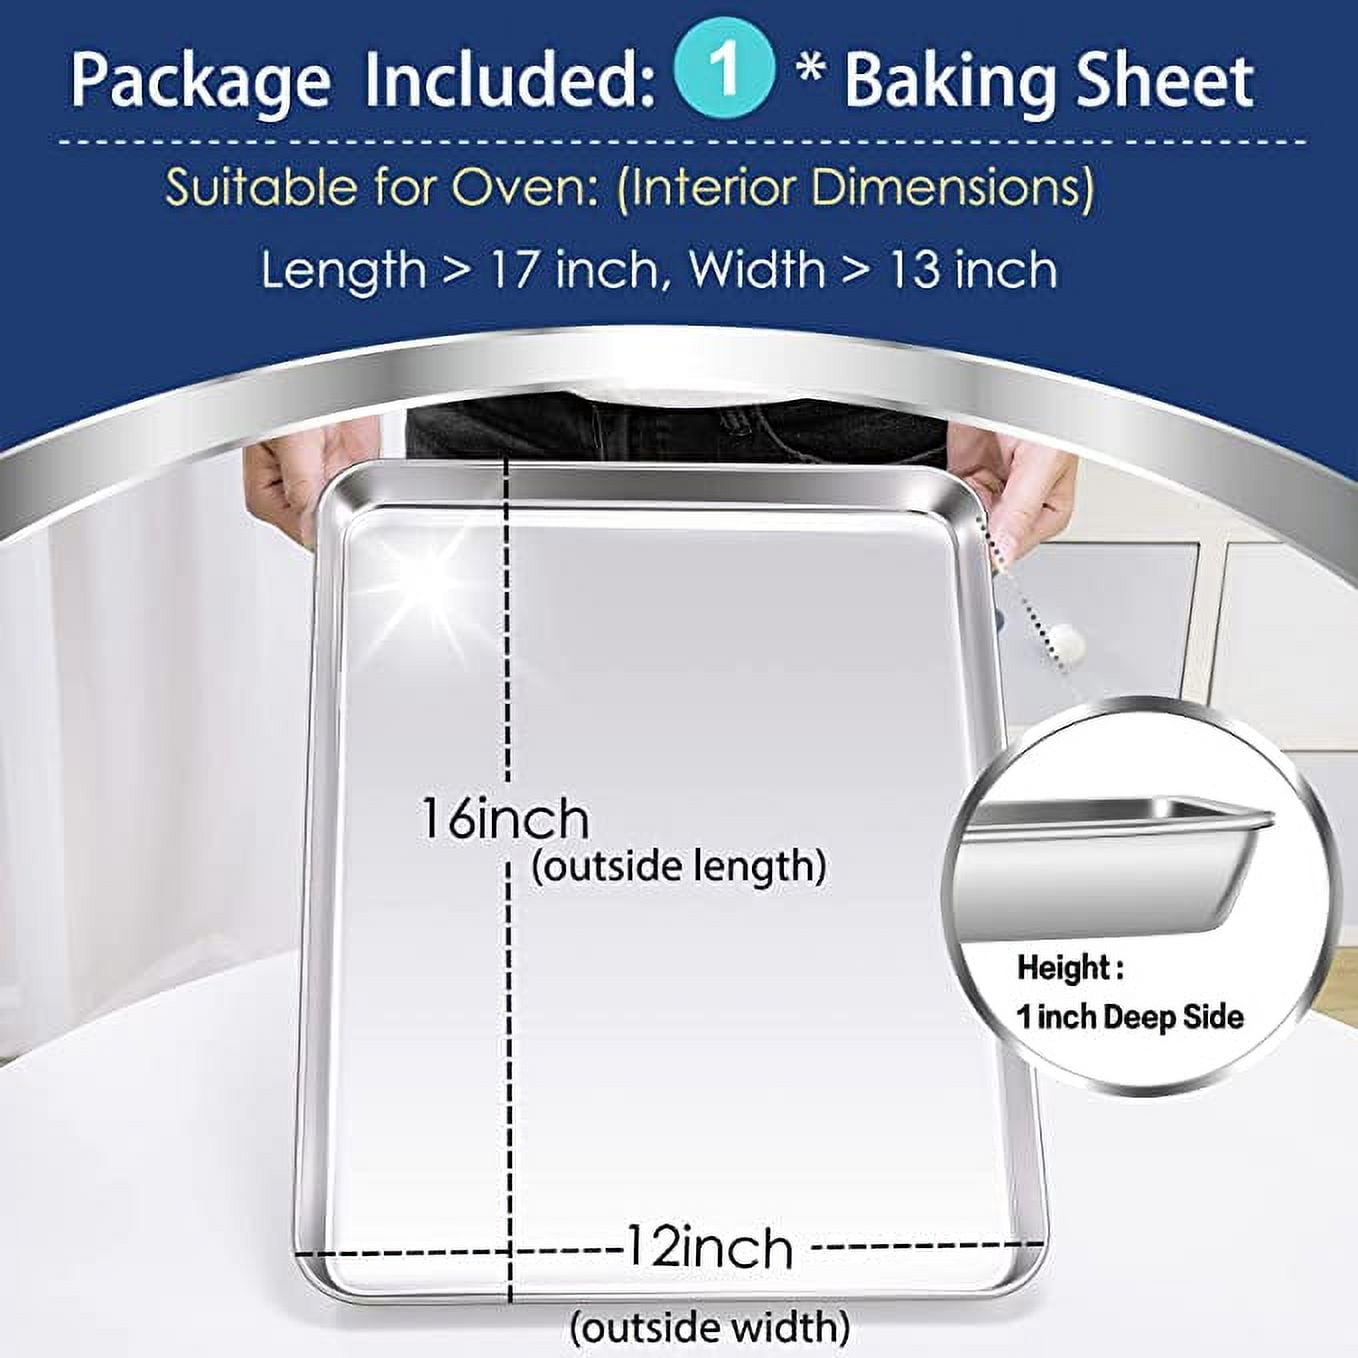 Commercial Quality Cookie Sheet Pan - 2 Pack Aluminum Half Sheet Baking Pan  by Saffron & Sage Home Living - This 13x18 Baking Sheet Set is Rust & Warp